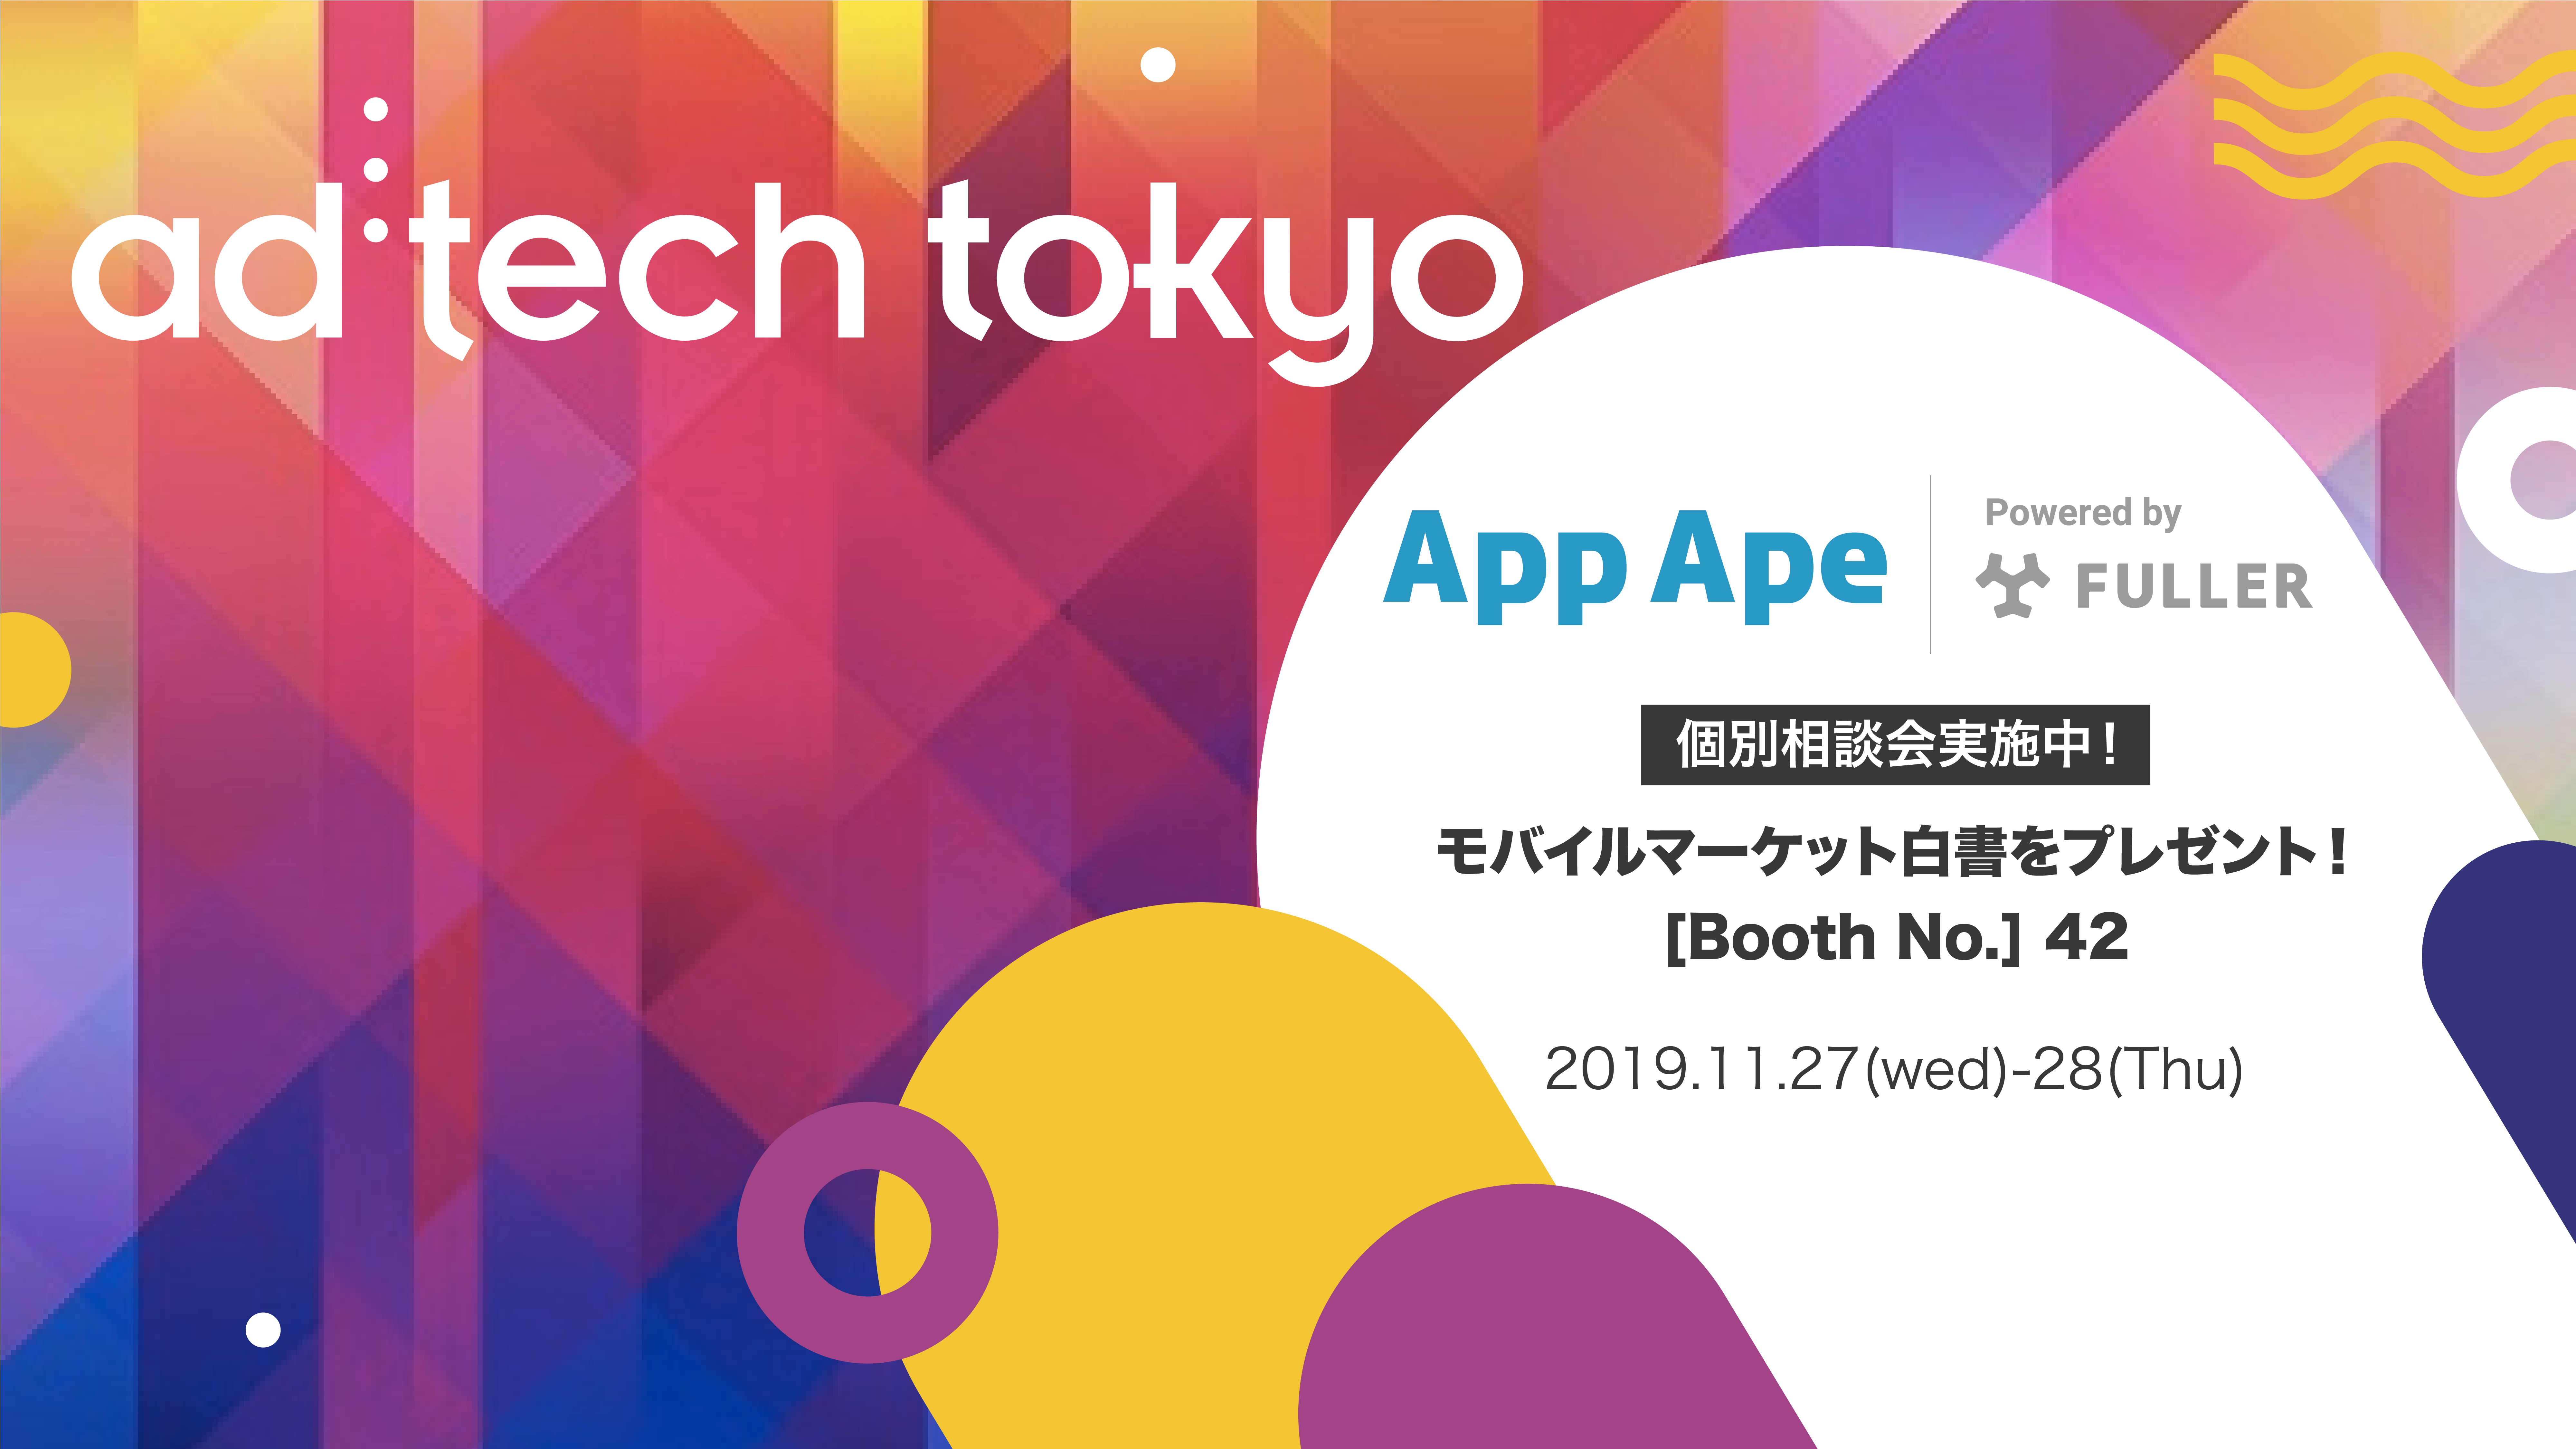 App Ape、ad:tech tokyo 2019に出展